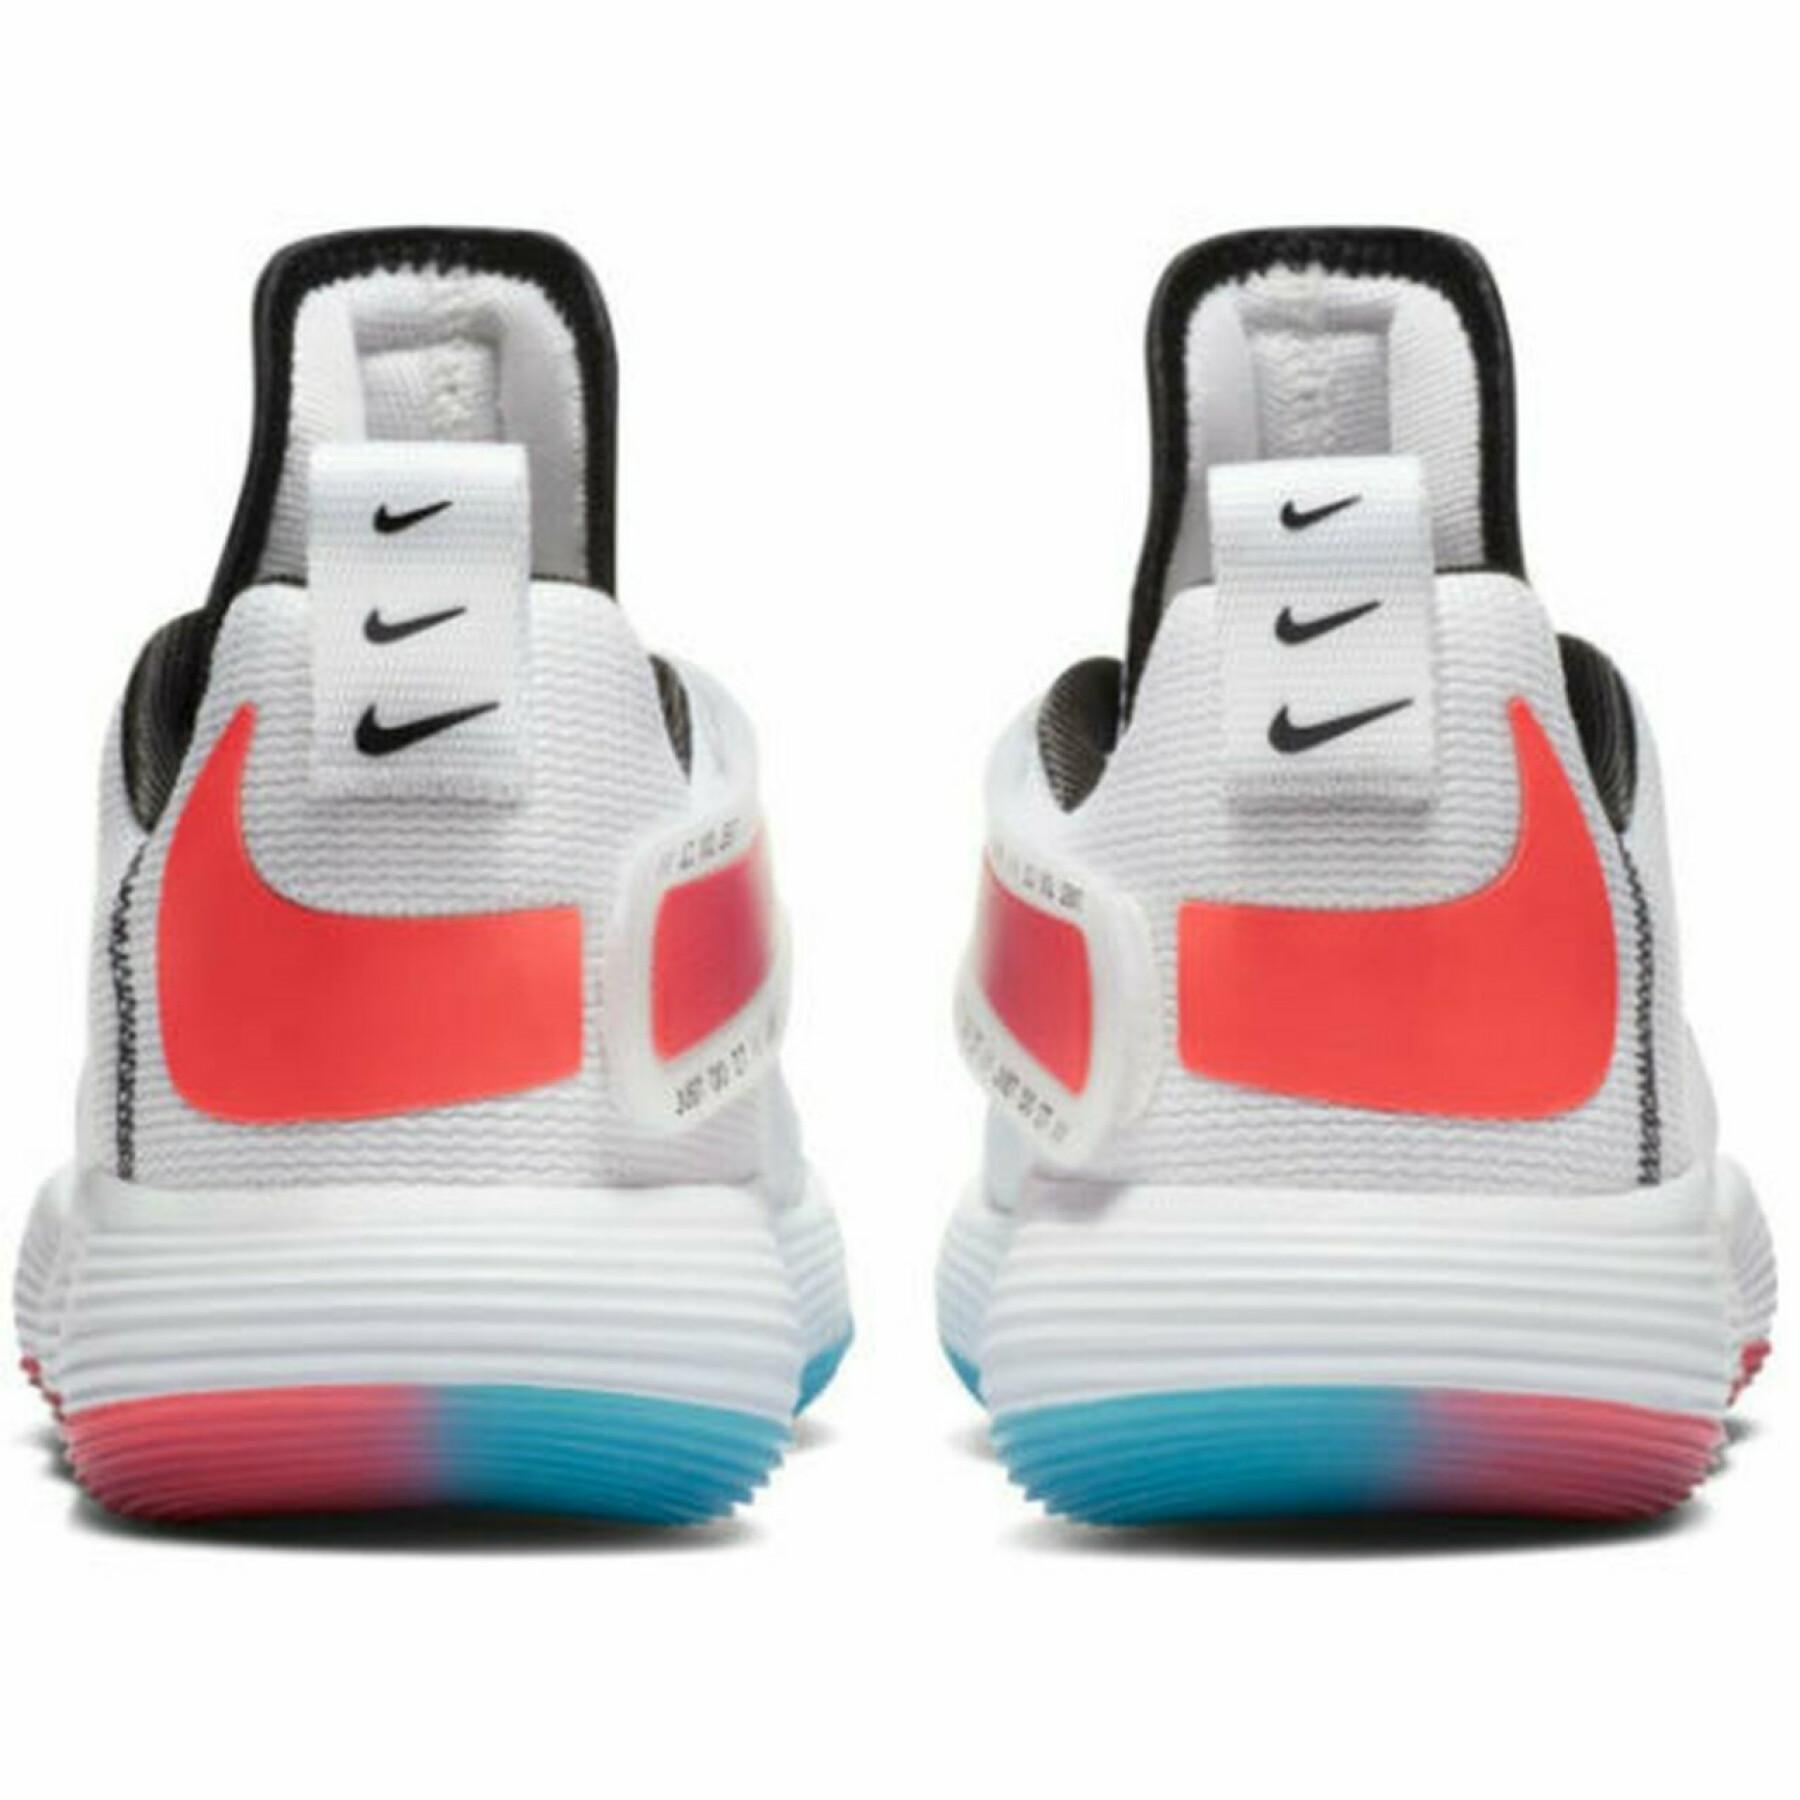 Buty Nike Zoom Hyperspeed Court